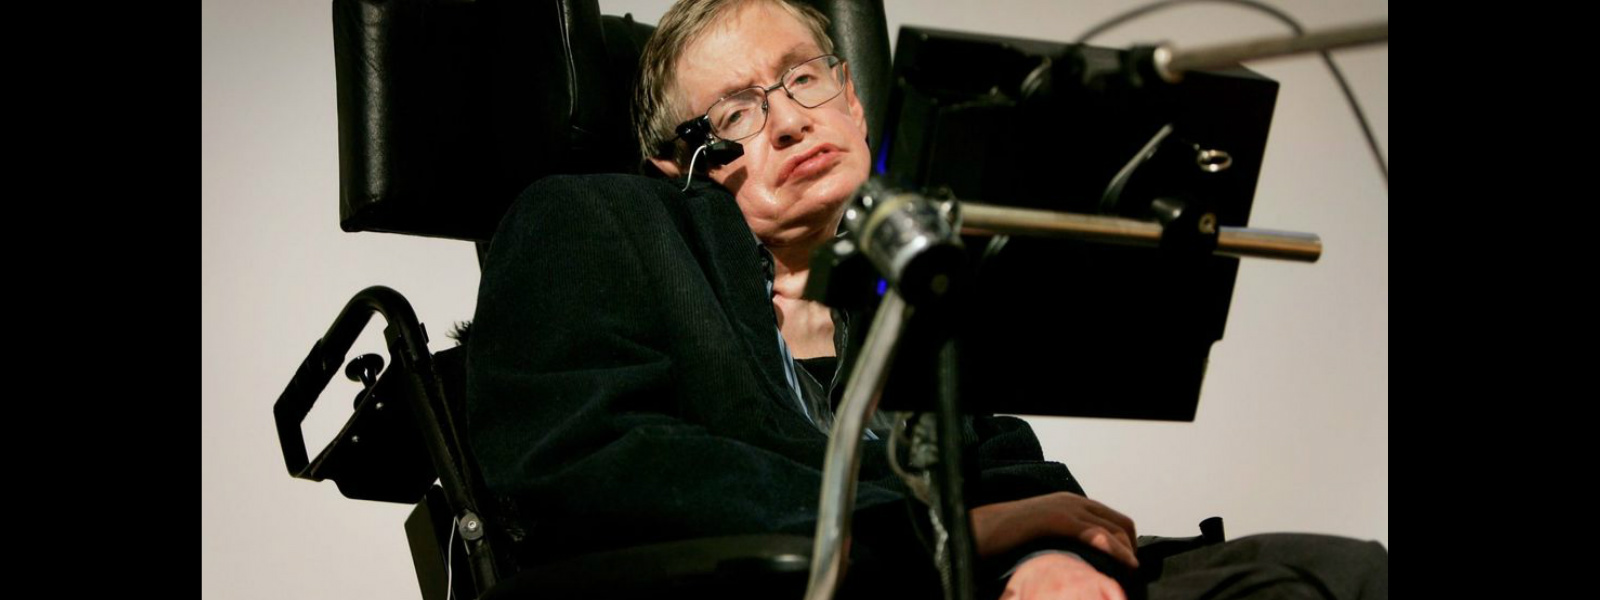 Scientist Stephen Hawking dies aged 76